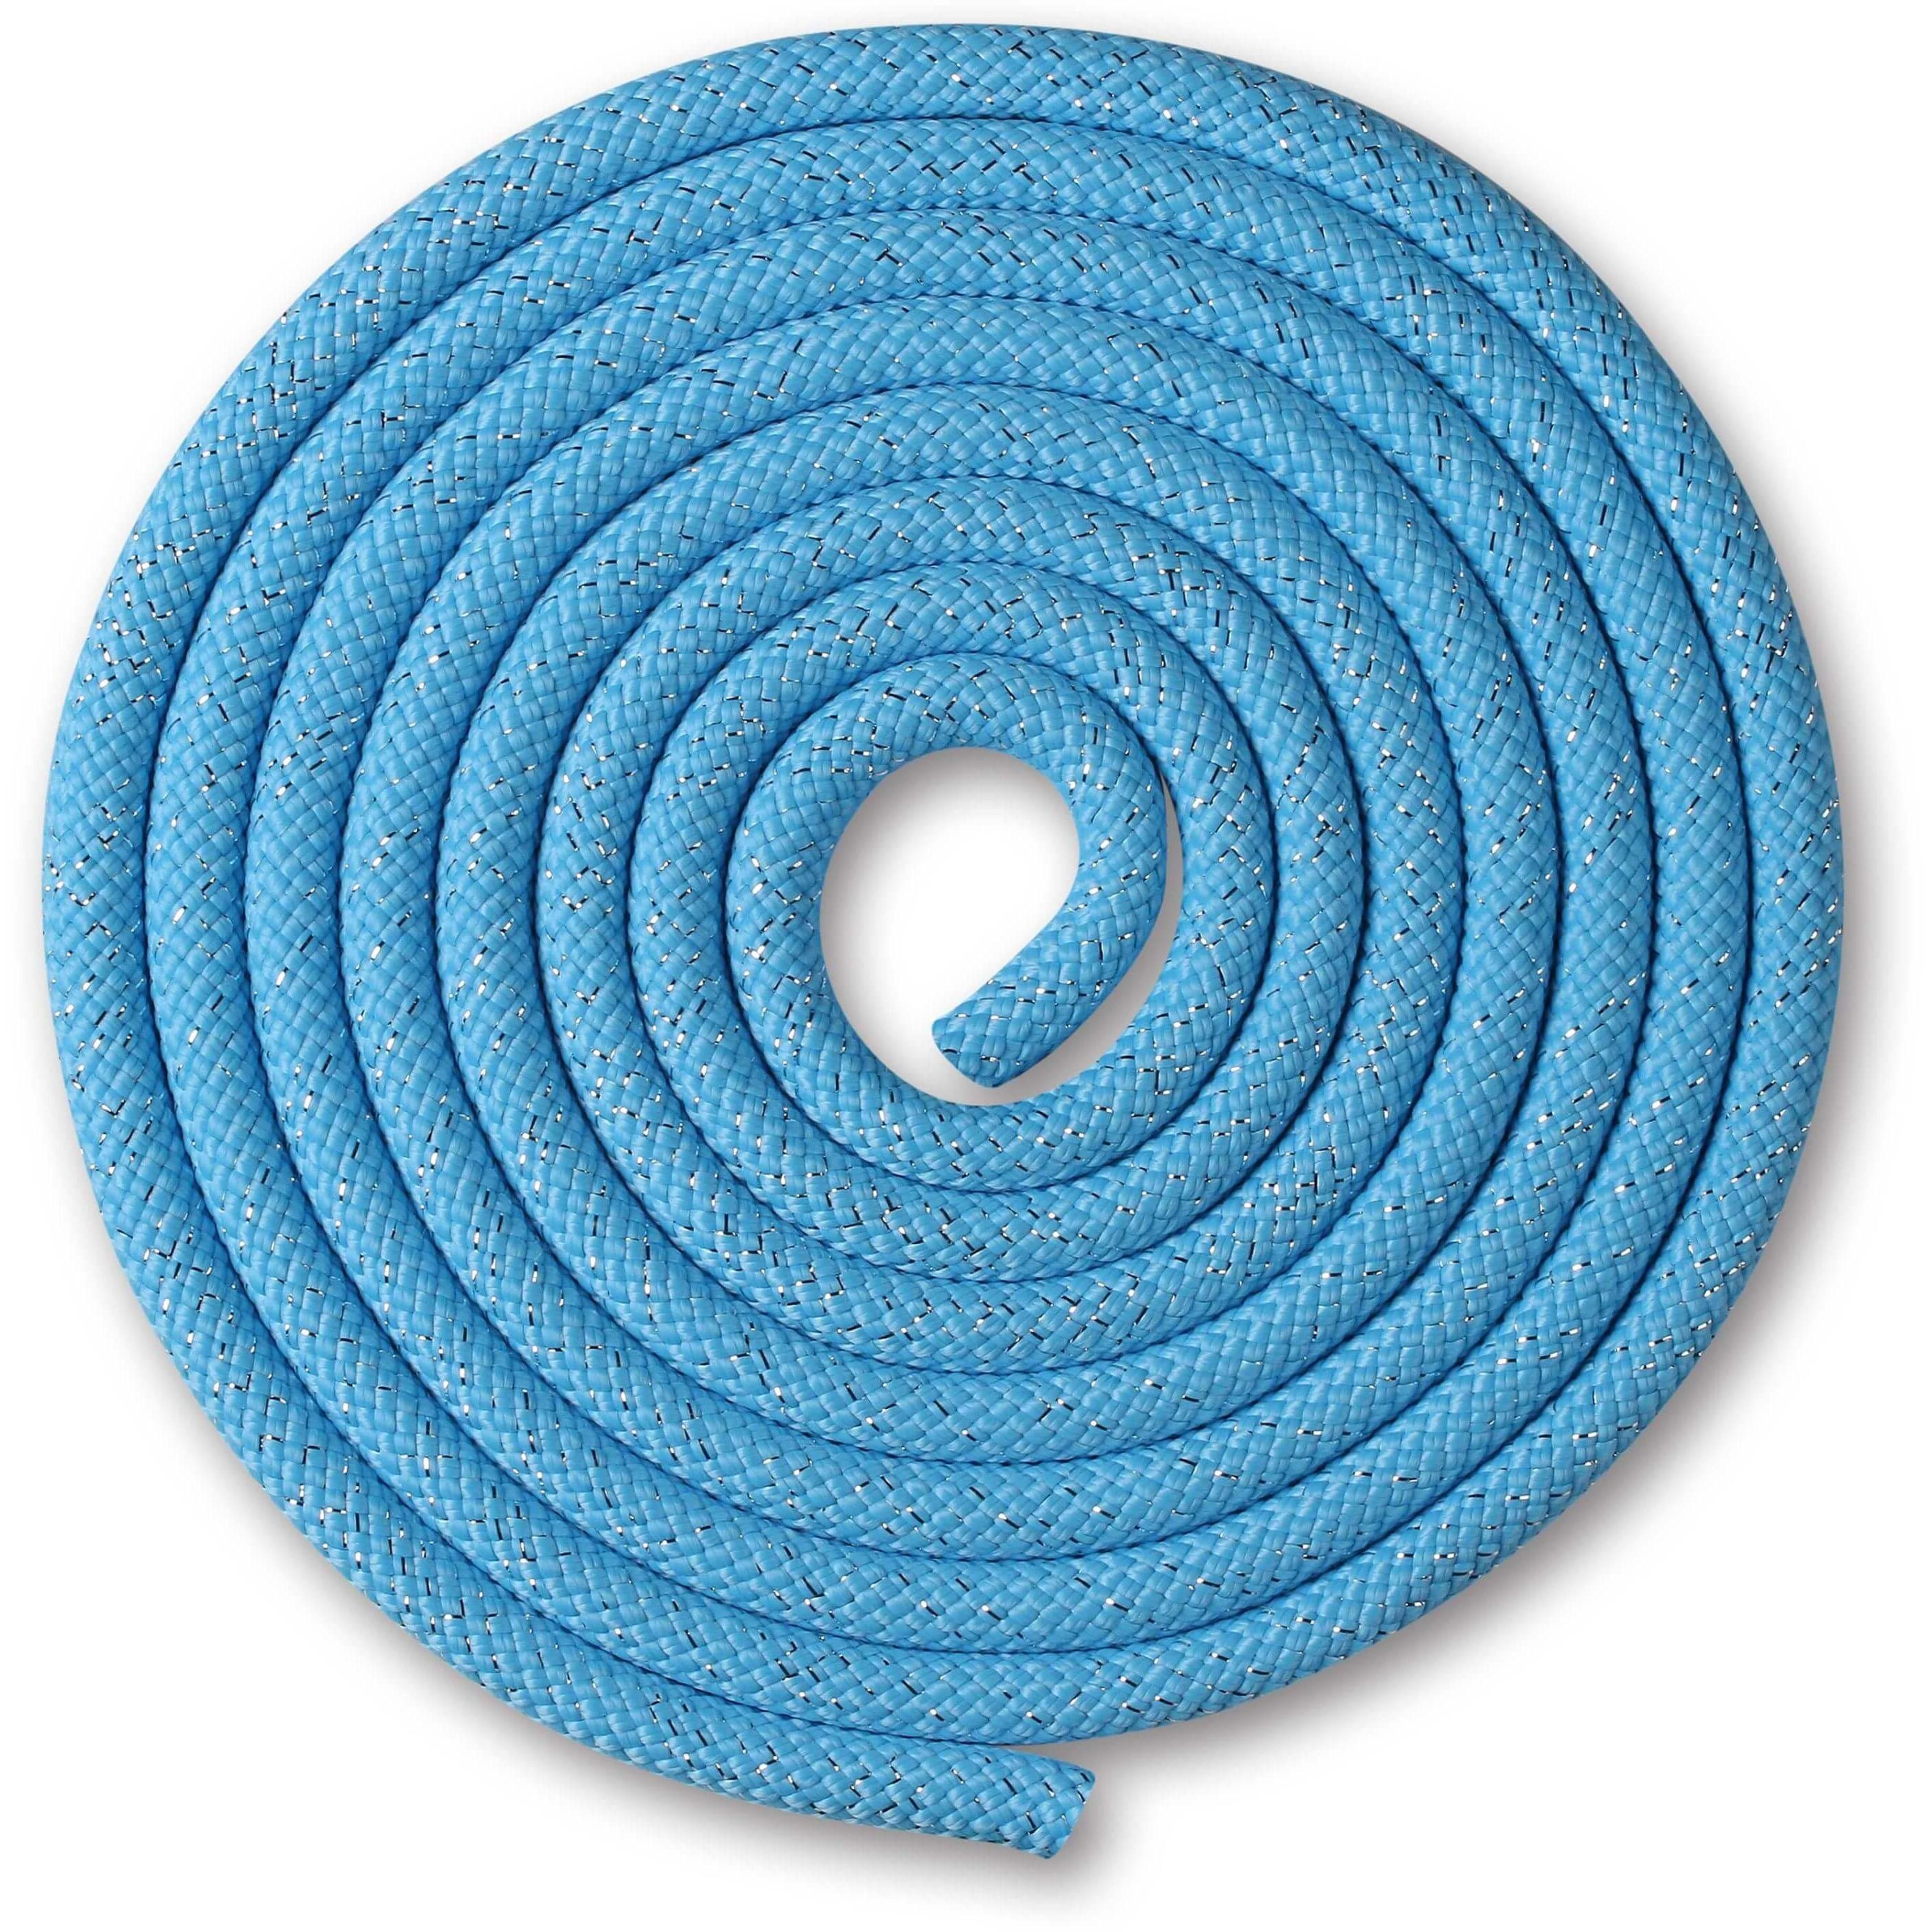 Cuerda para Gimnasia Rítmica Ponderada 150 g con Lurex INDIGO 2,5 m Azul Claro